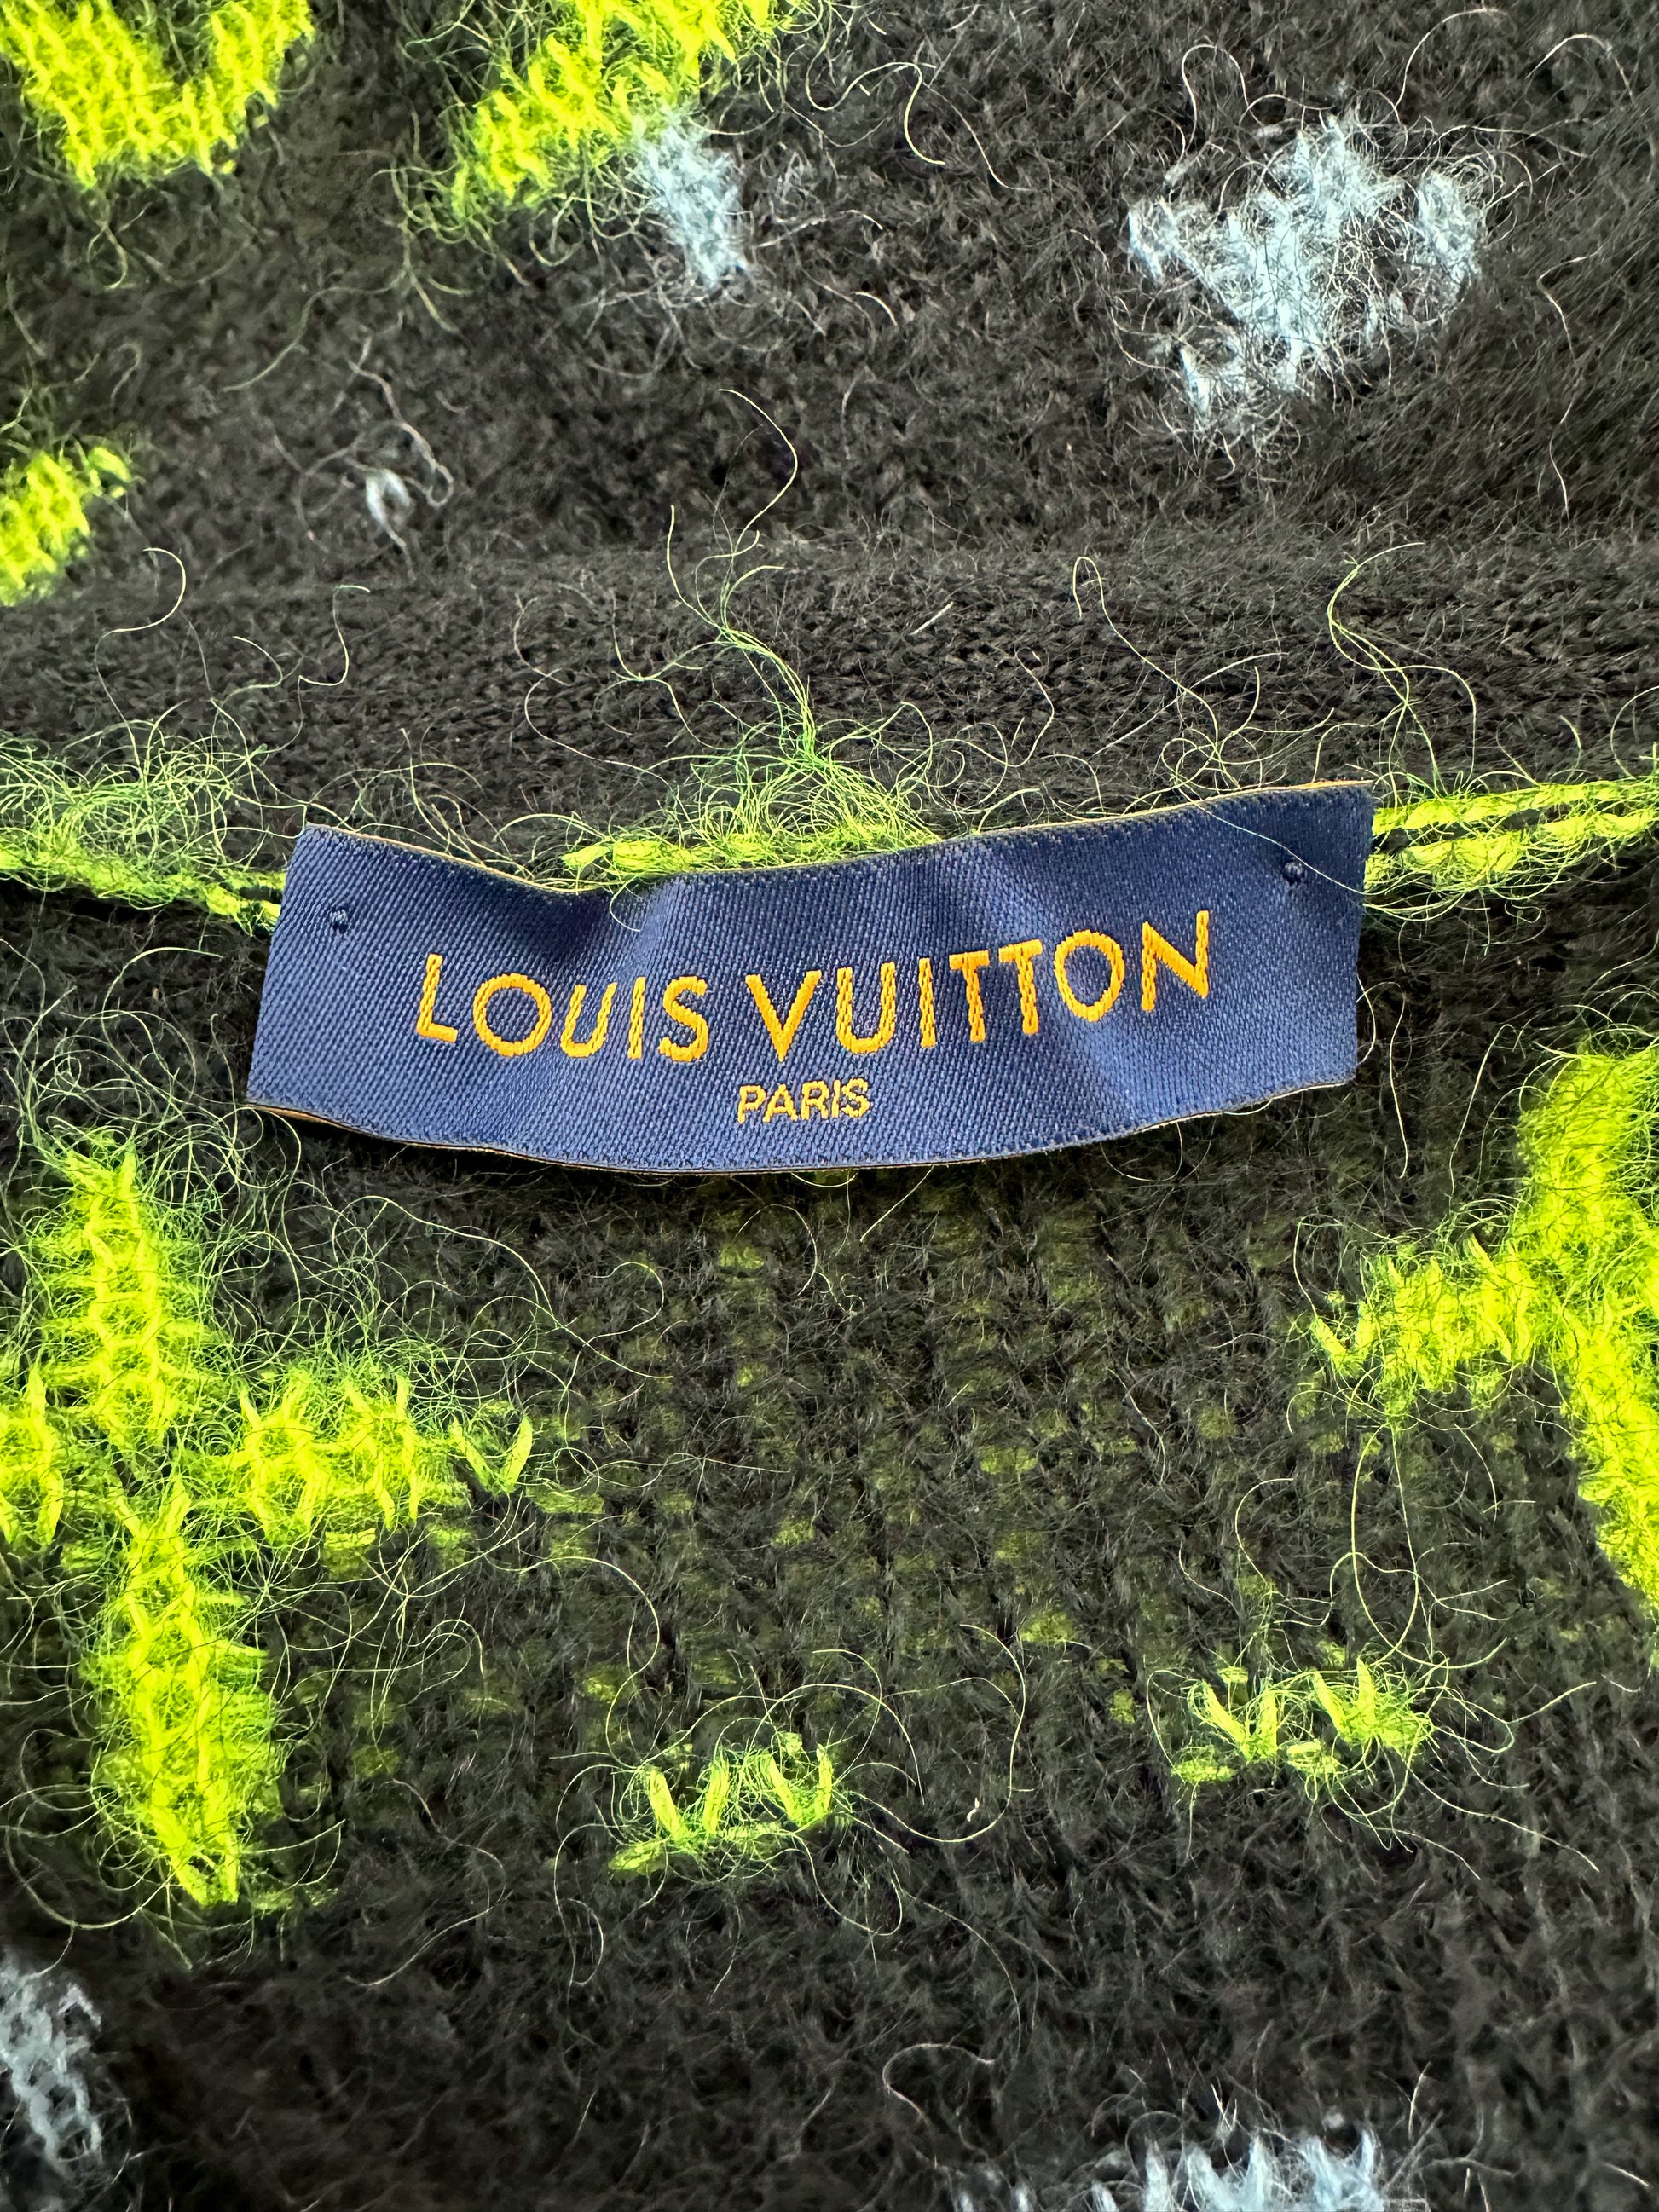 Louis Vuitton Signature Cardigan multicolor sz M